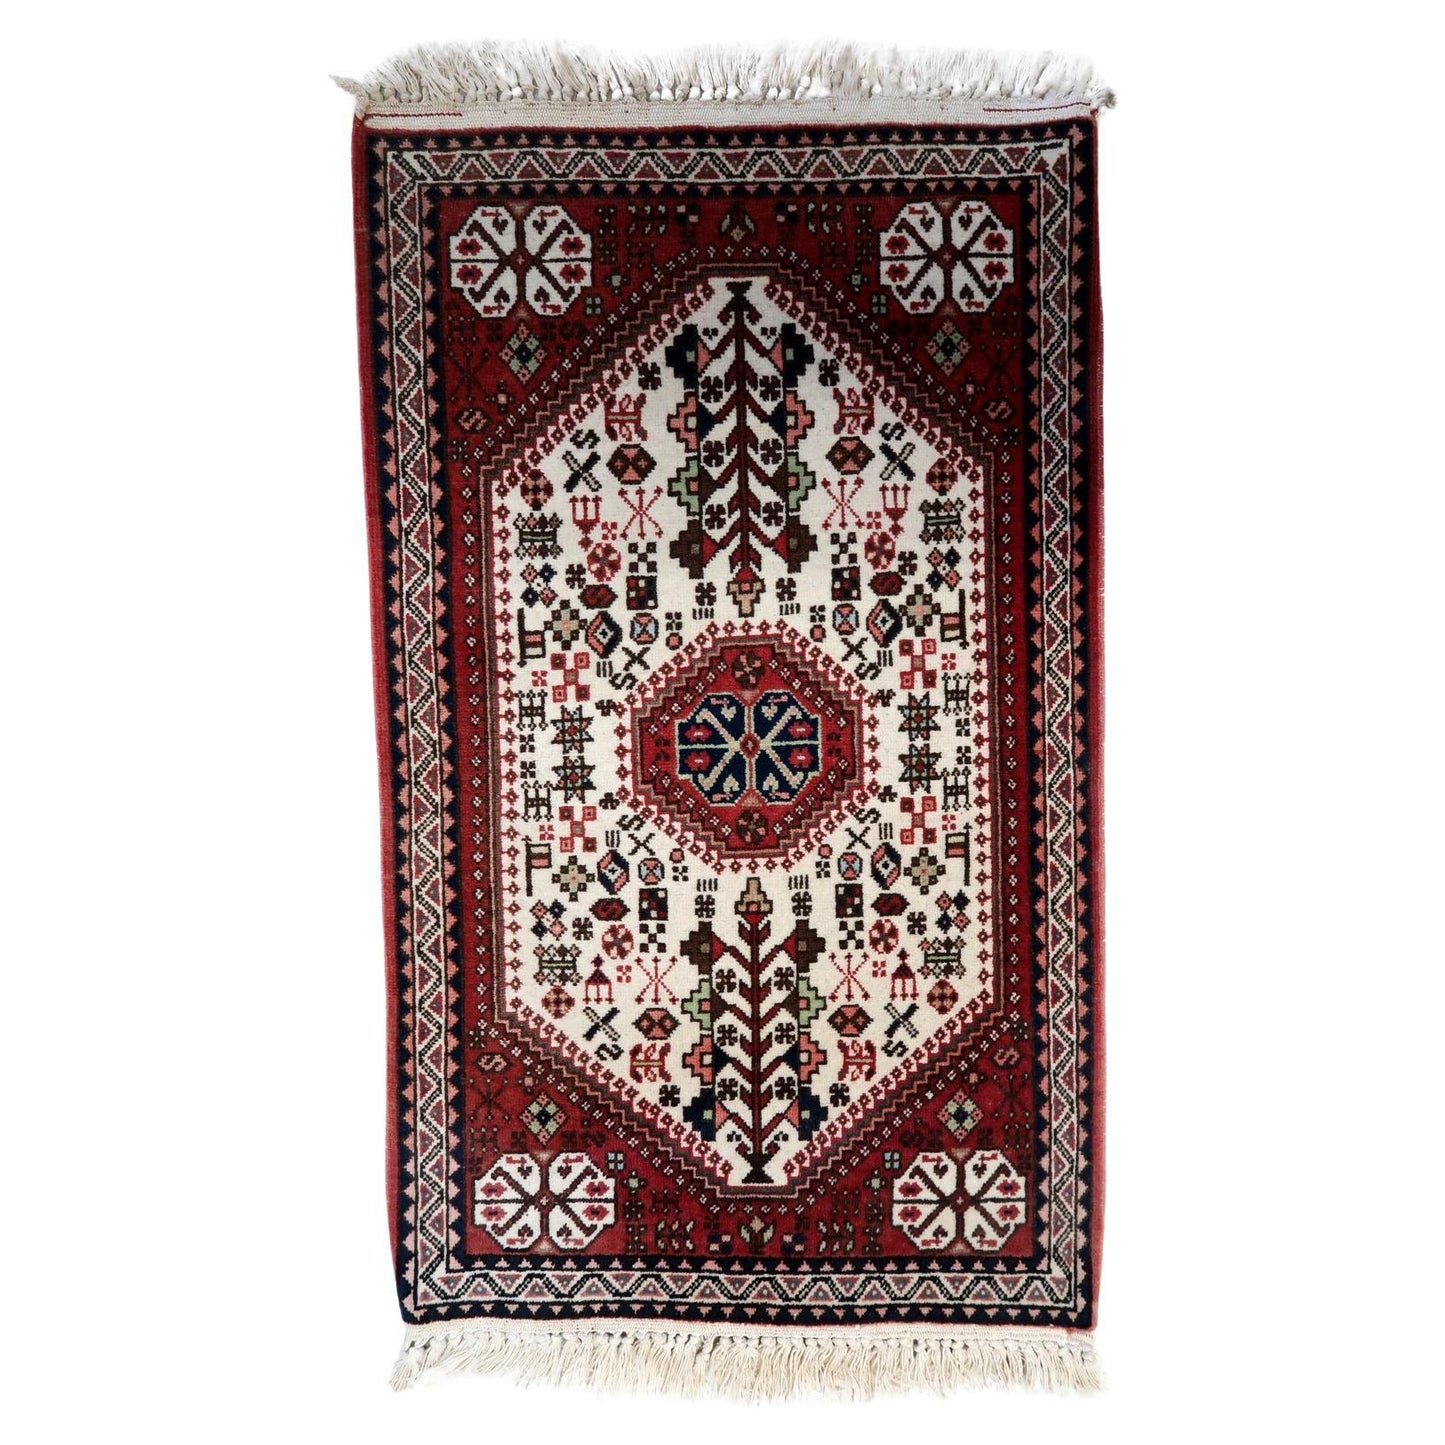 Handmade Vintage Persian Gashkai Rug showcasing intricate woven designs in deep reds, creams, and blues